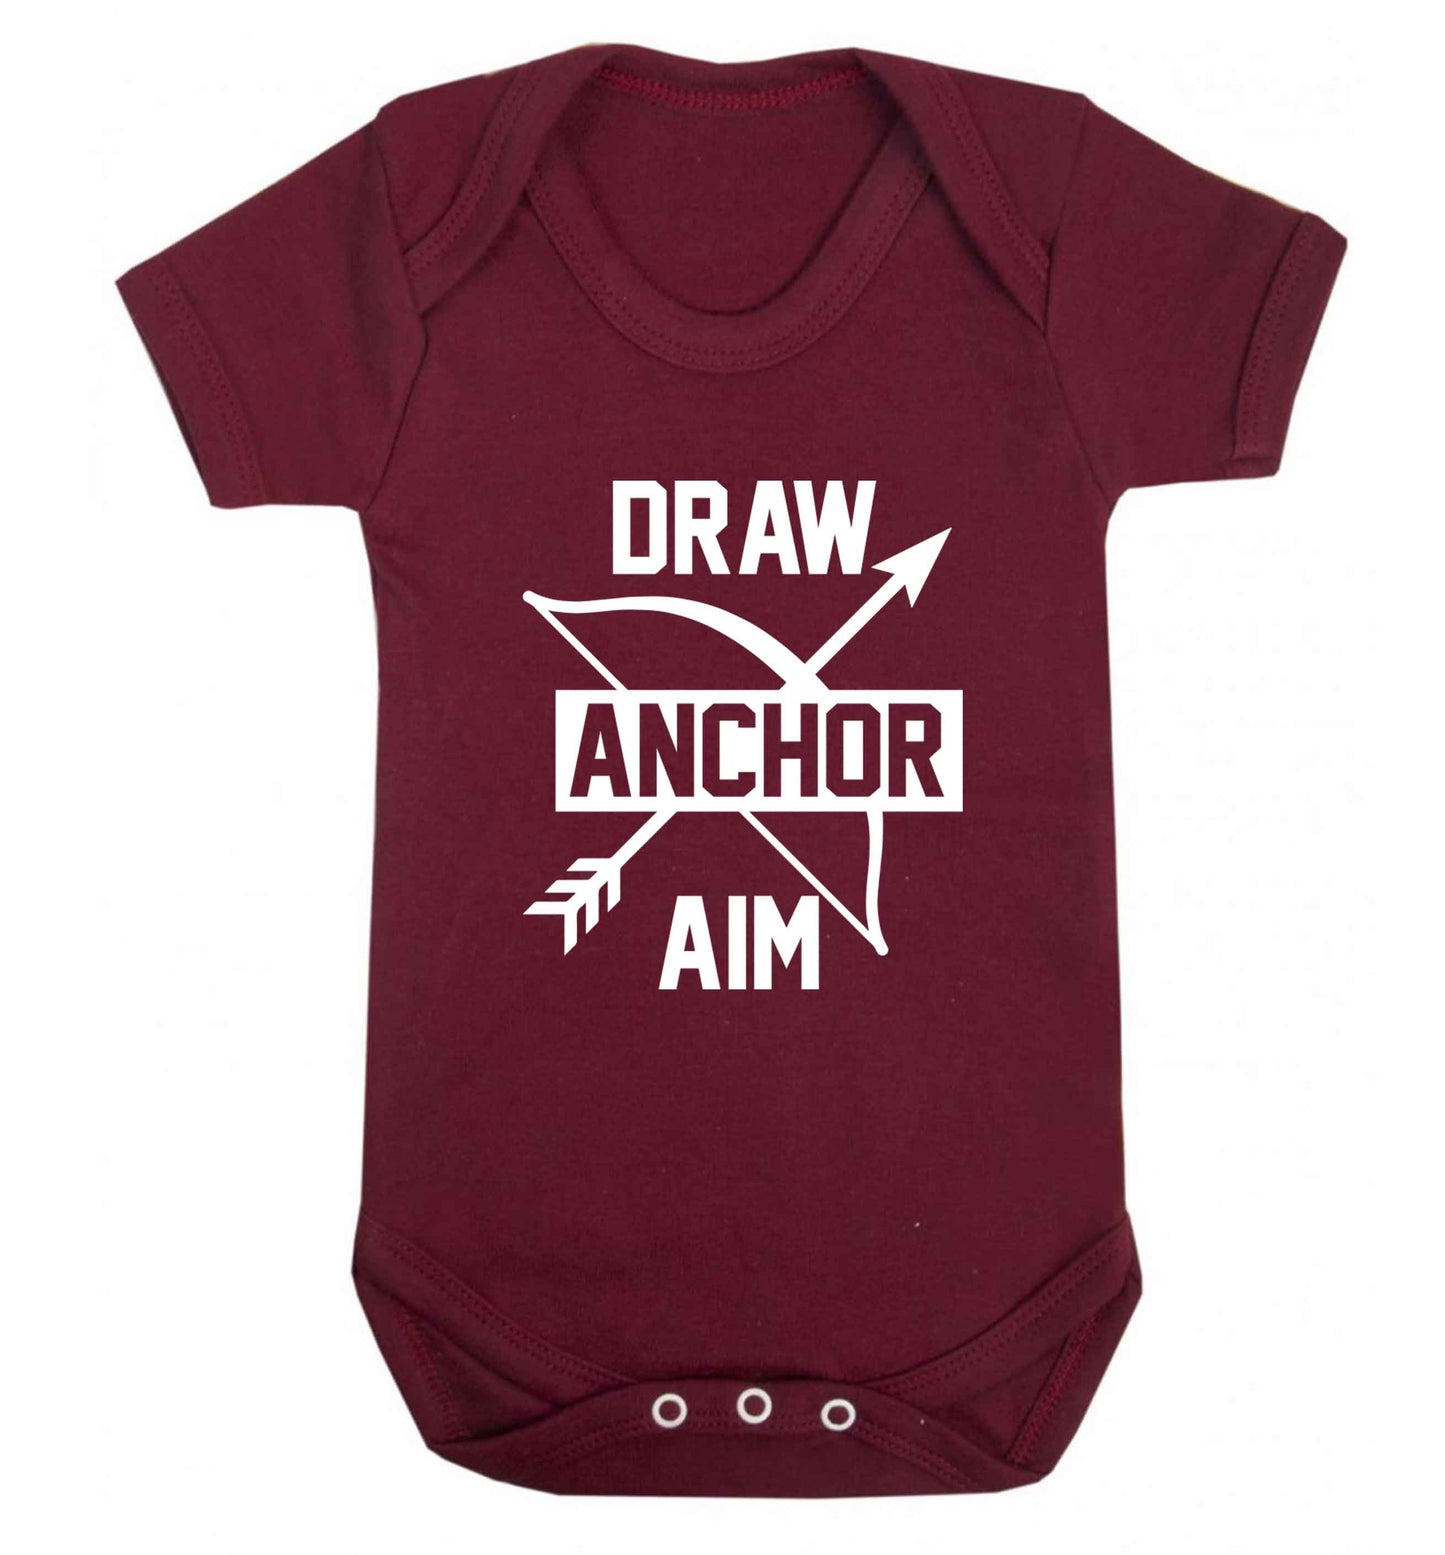 Draw anchor aim Baby Vest maroon 18-24 months